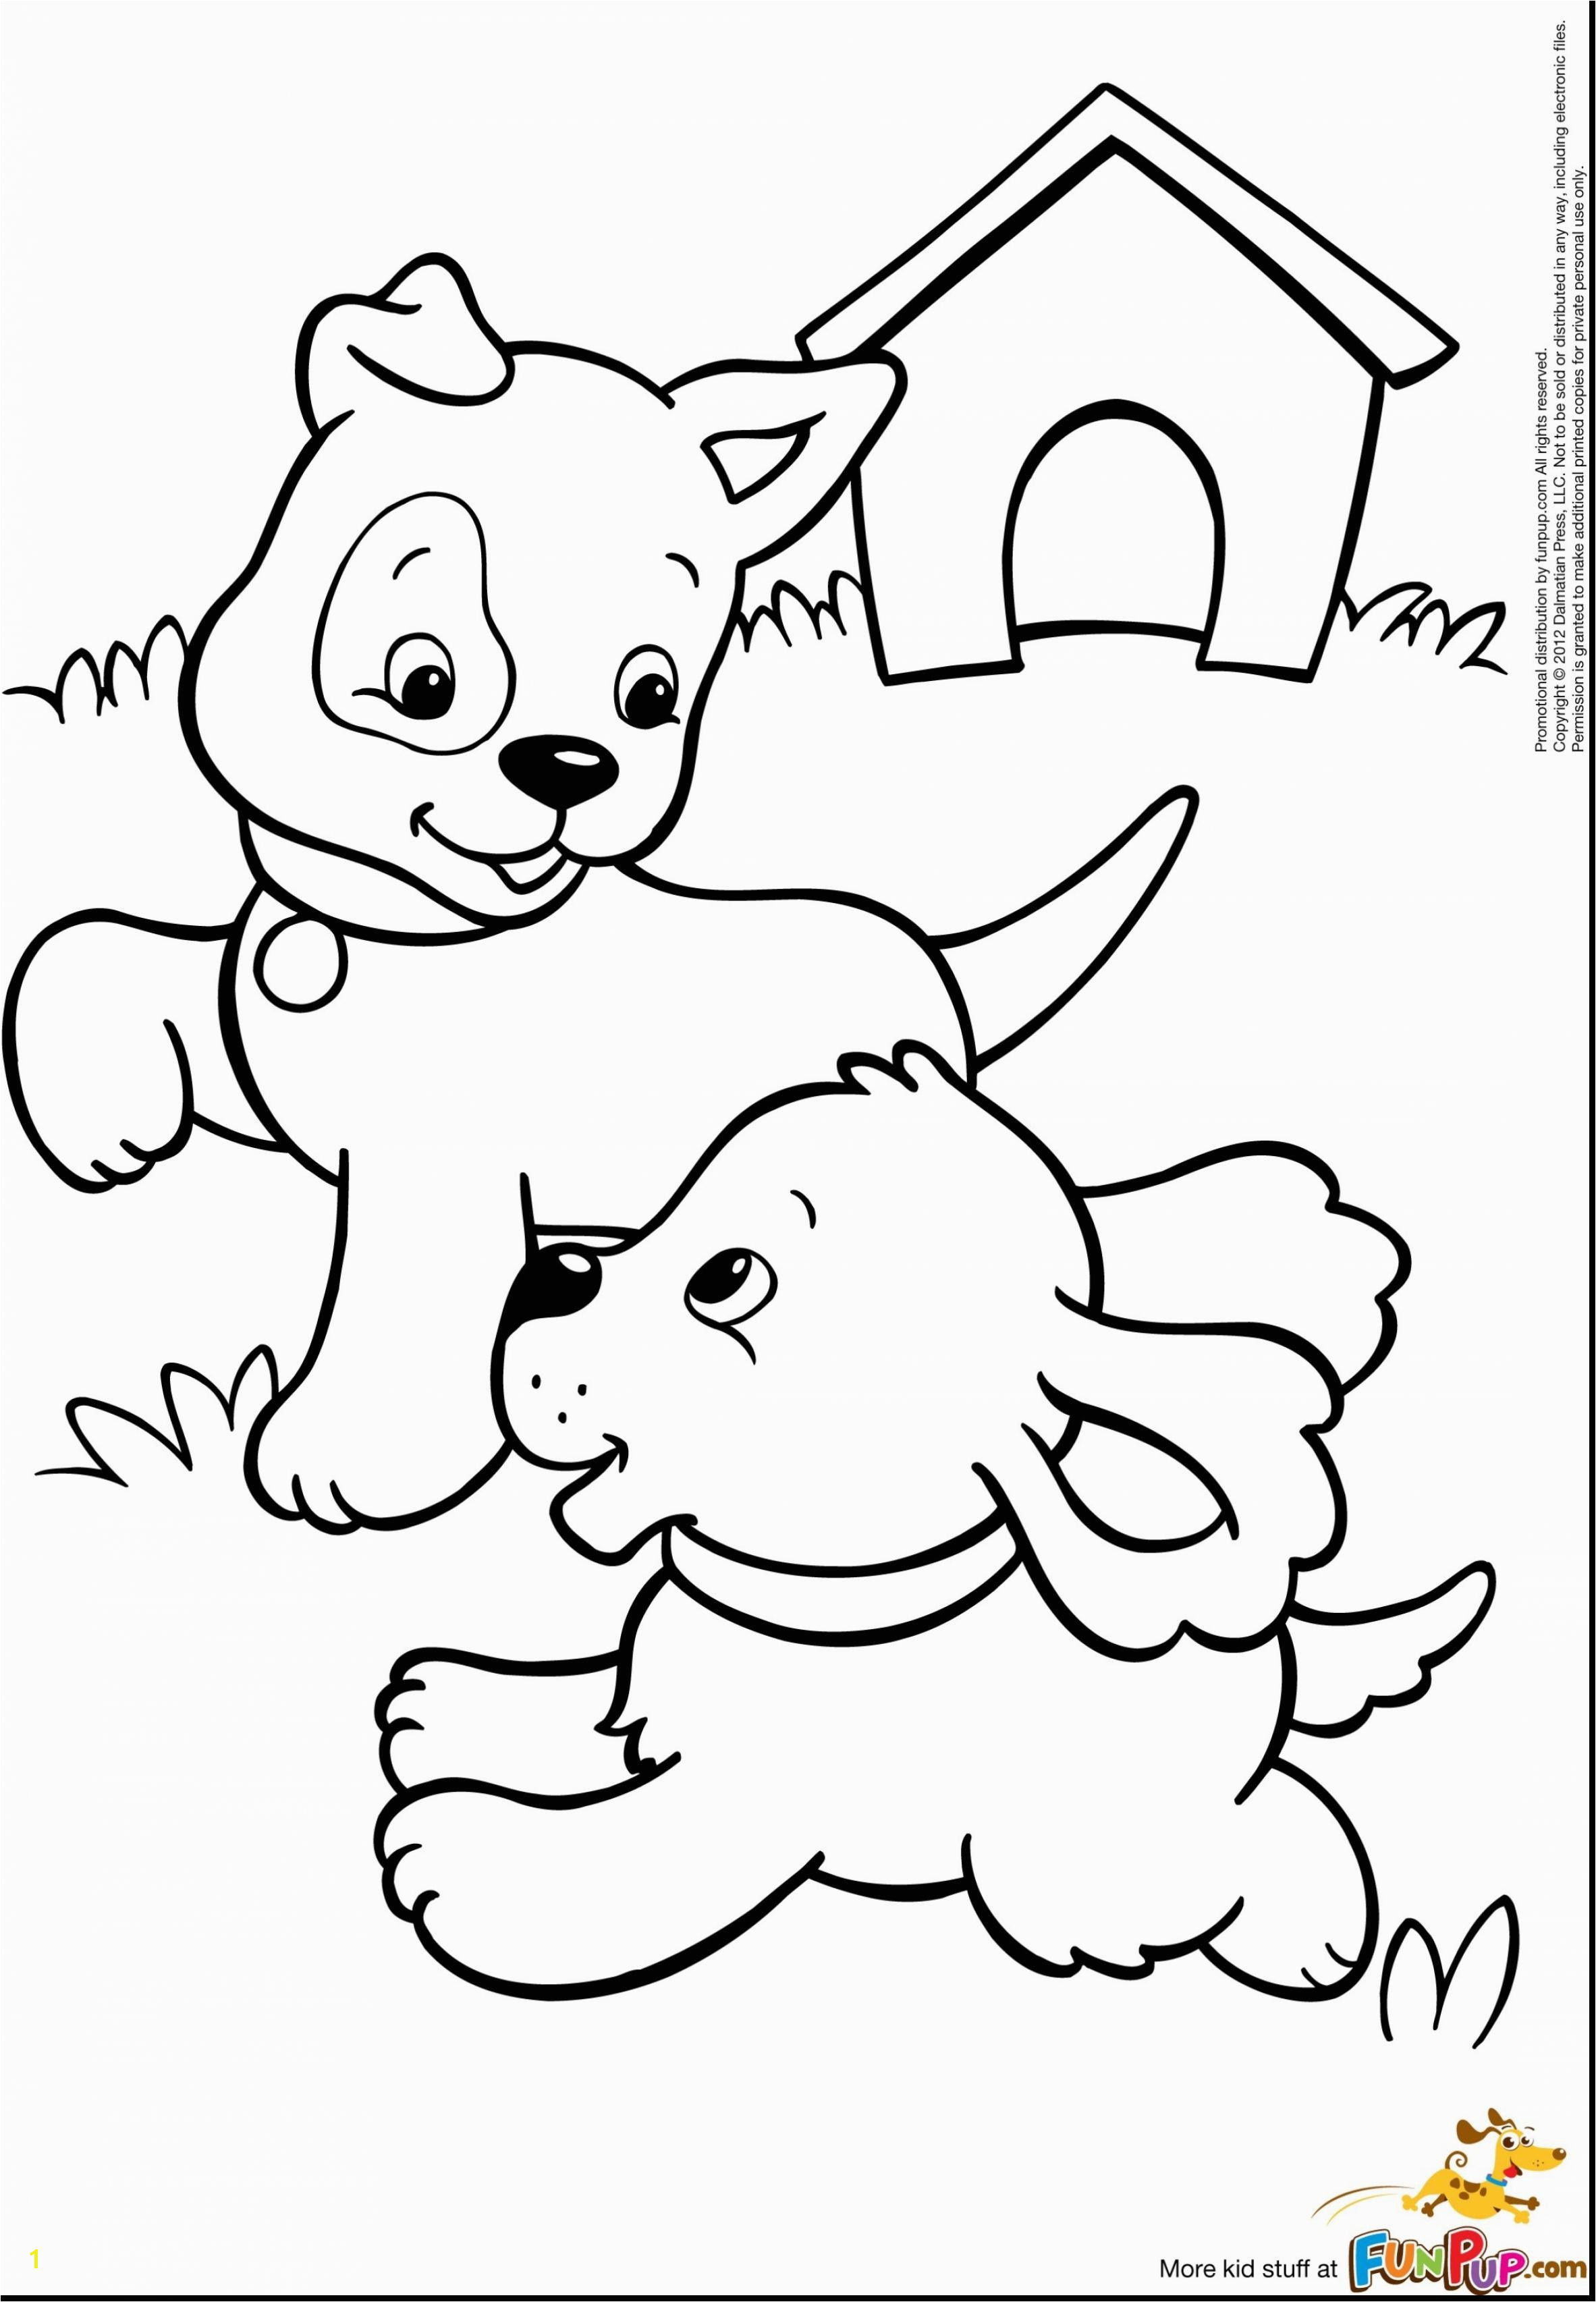 Coloring Pages for Kids Dogs Meilleur De Free Printable Puppy Coloring Pages Printable Coloring Page